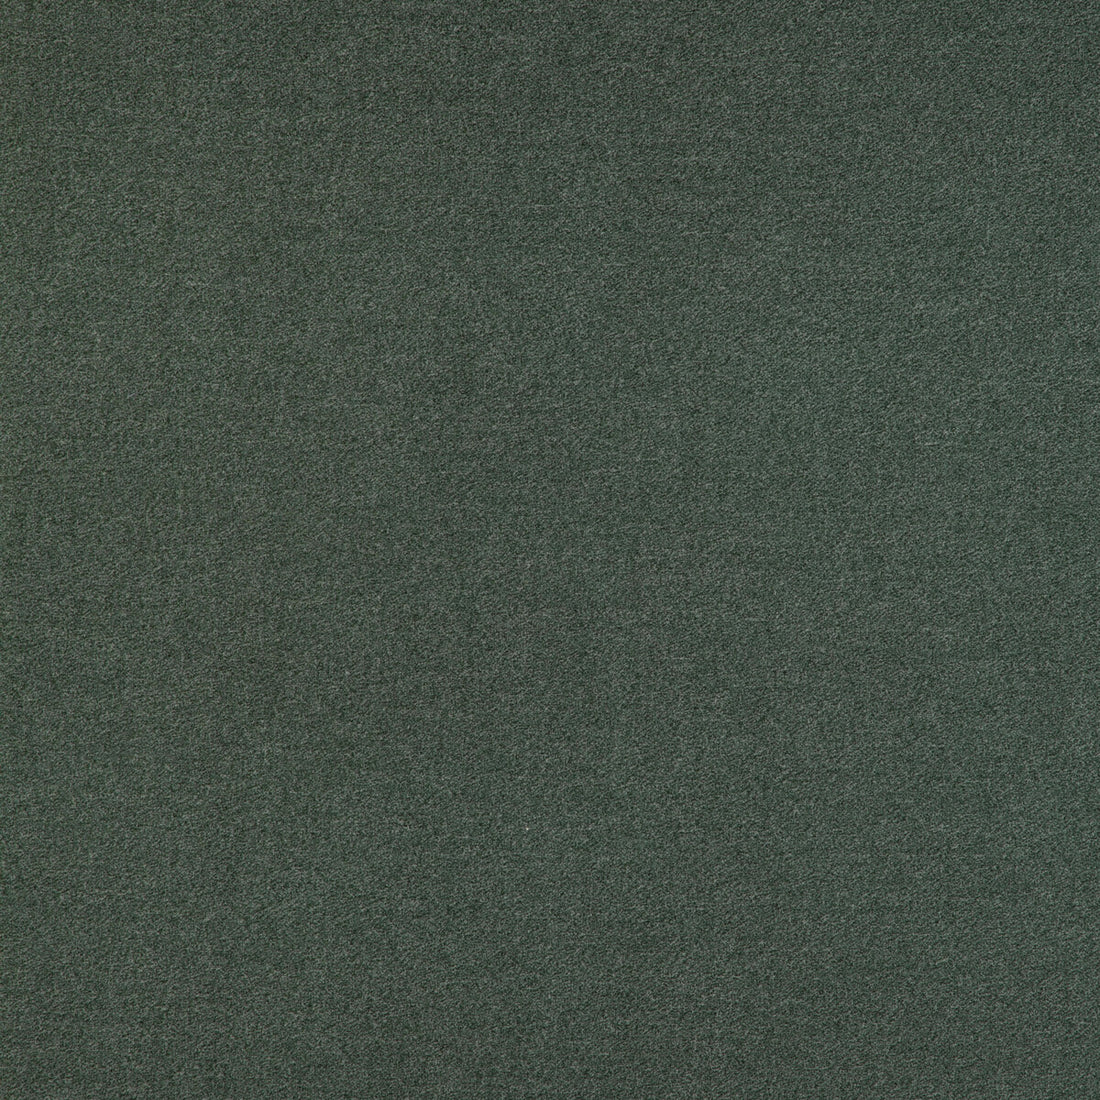 Kravet Smart fabric in 37000-3 color - pattern 37000.3.0 - by Kravet Smart in the Performance Kravetarmor collection